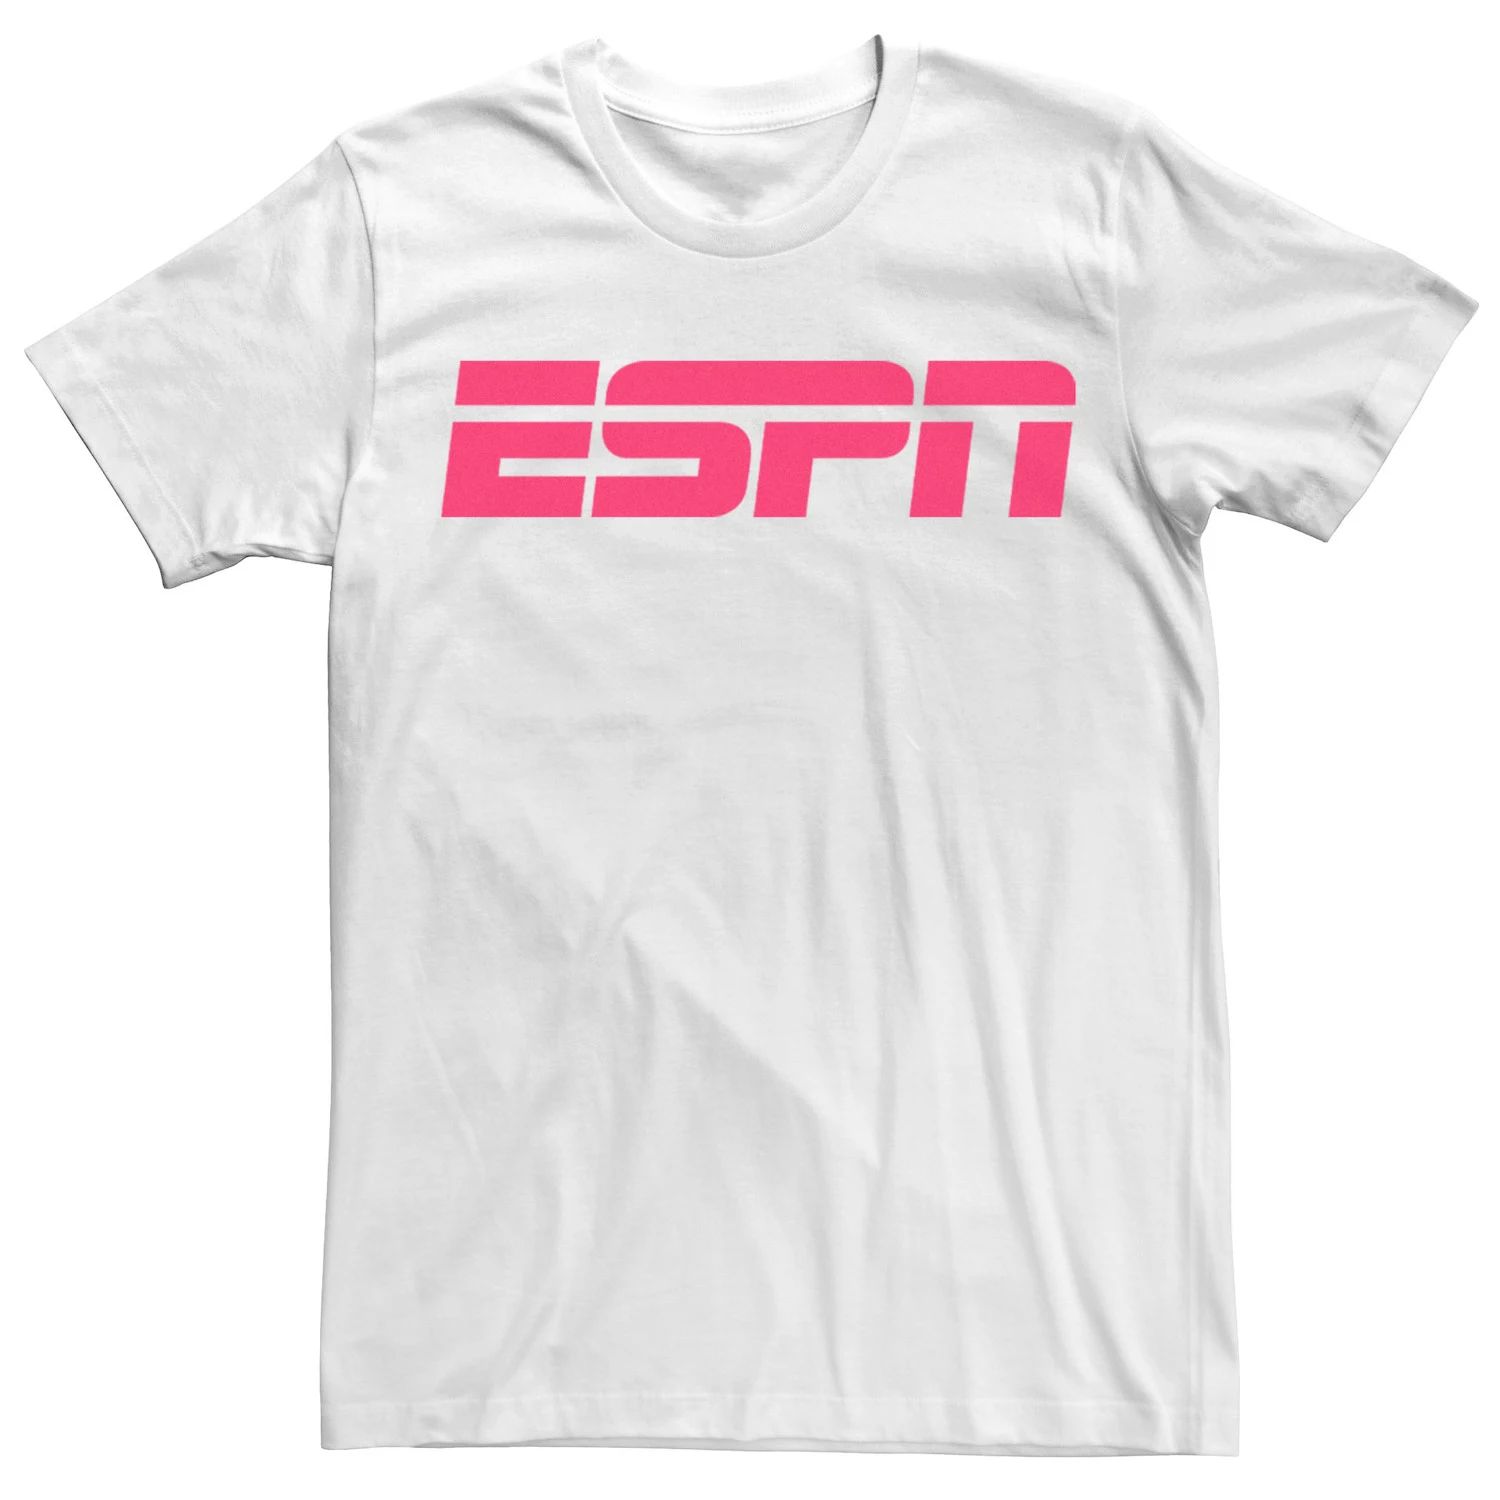 Мужская черная футболка с логотипом ESPN Licensed Character